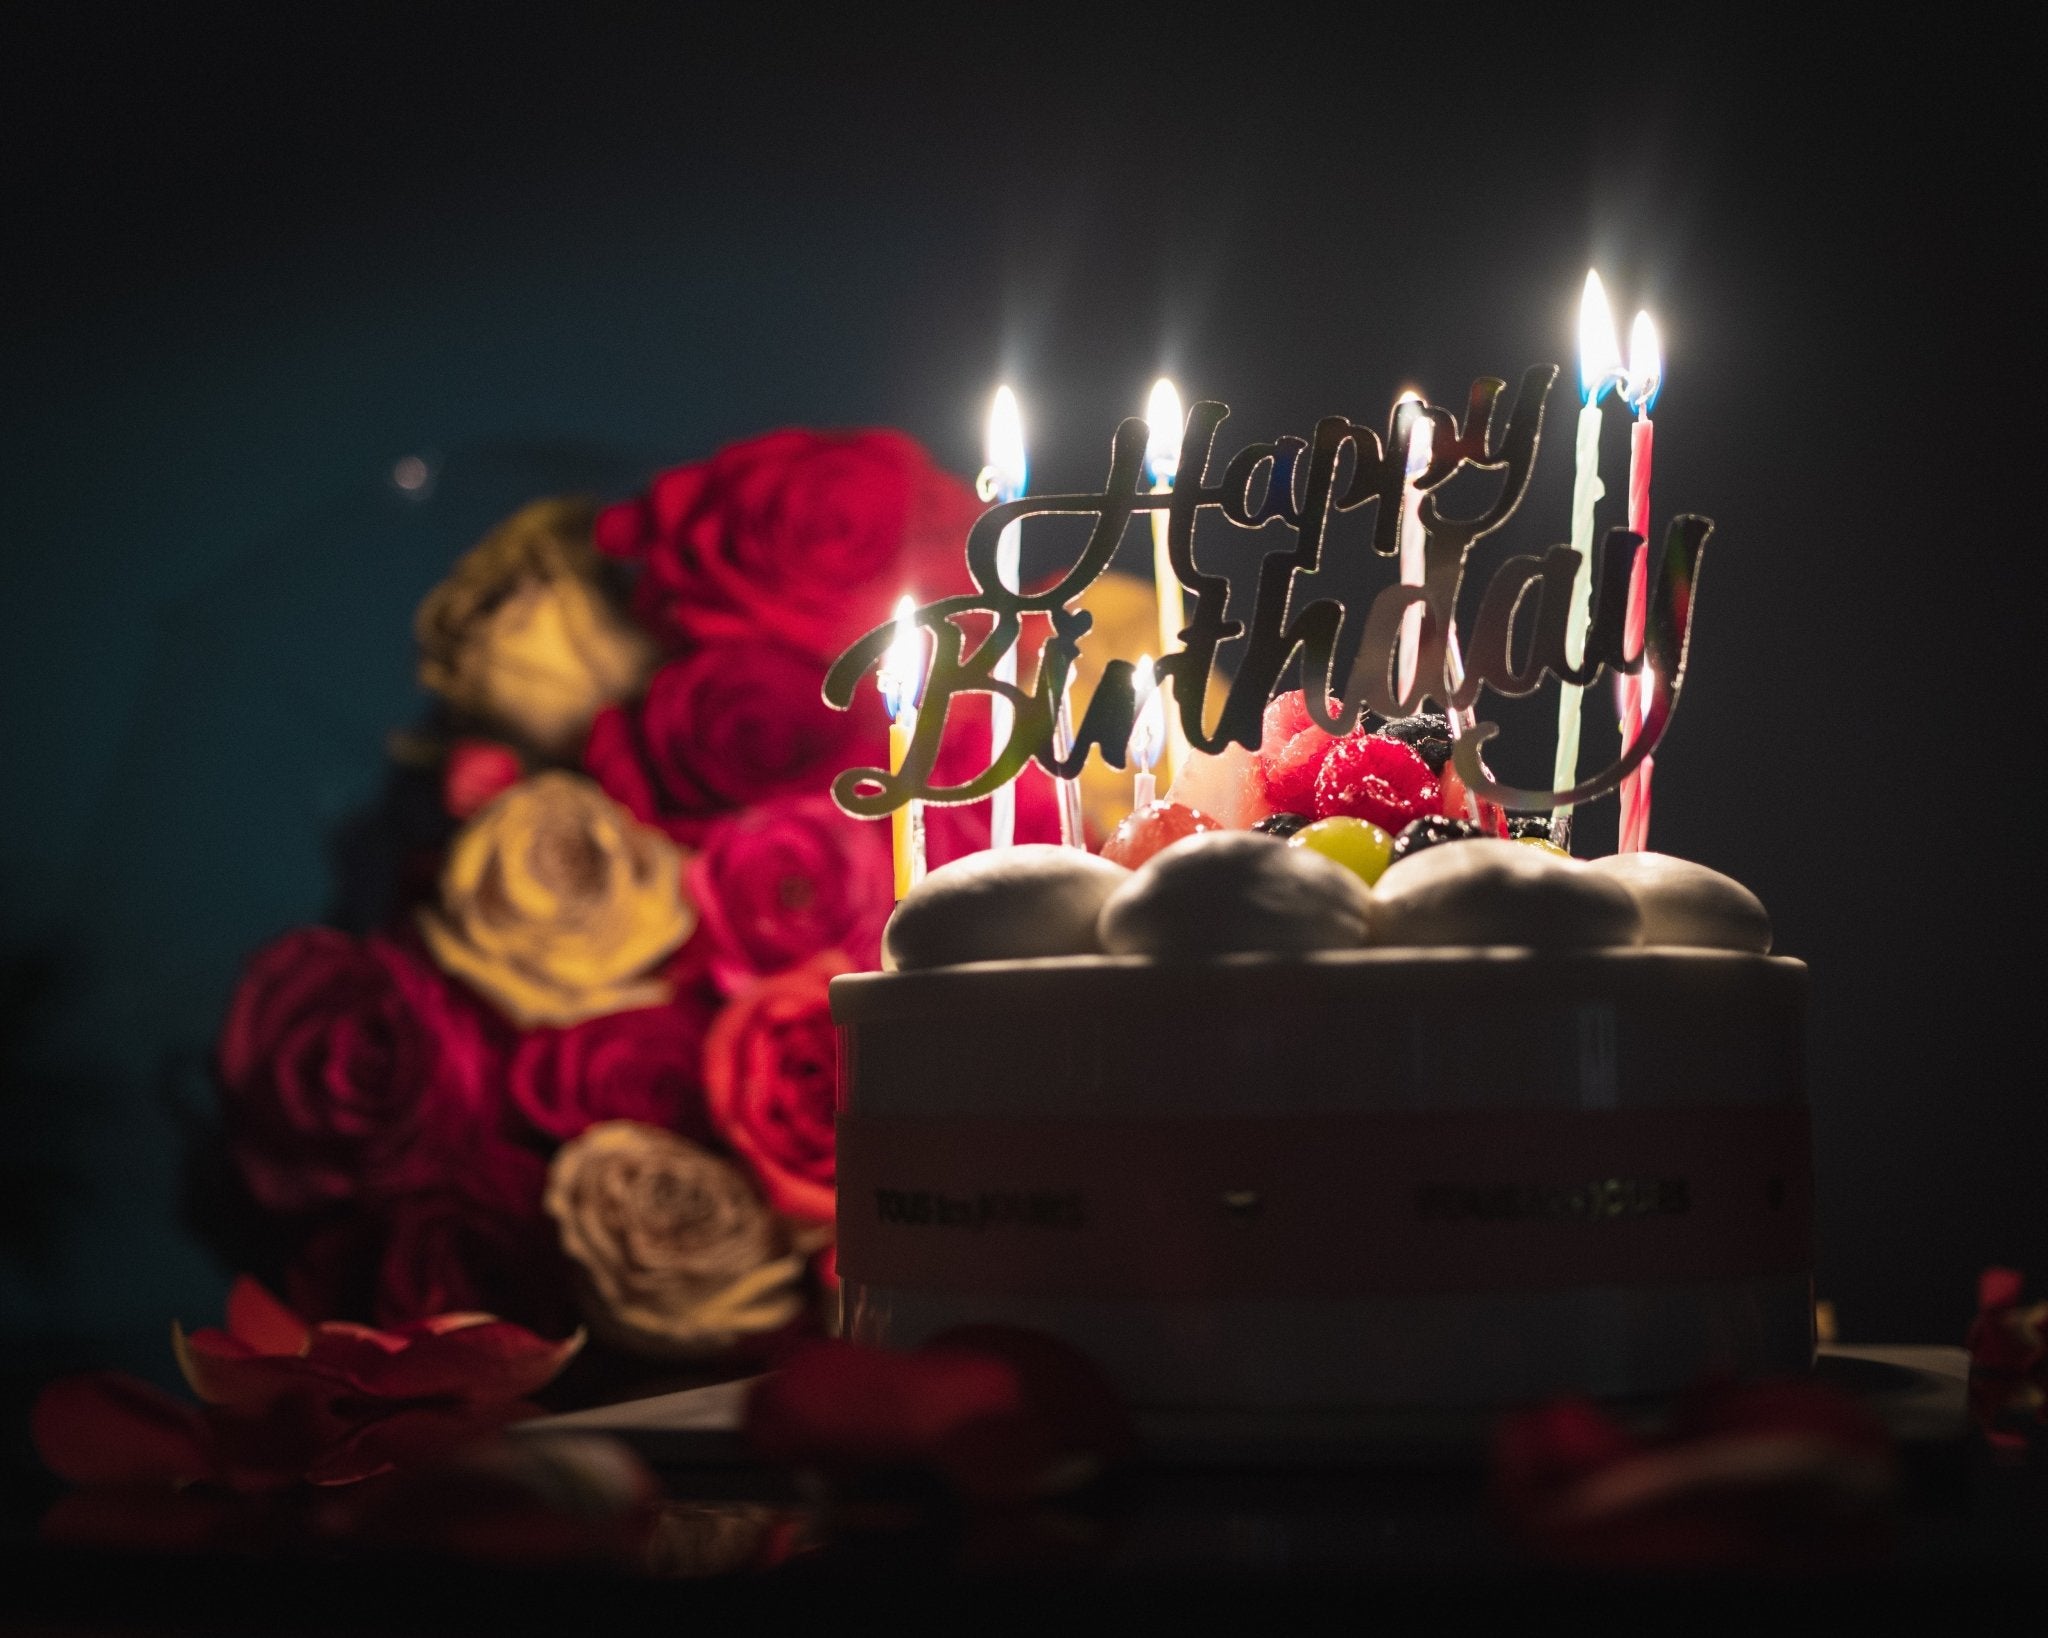 18th Birthday Cake Ideas | Patisserie Valerie